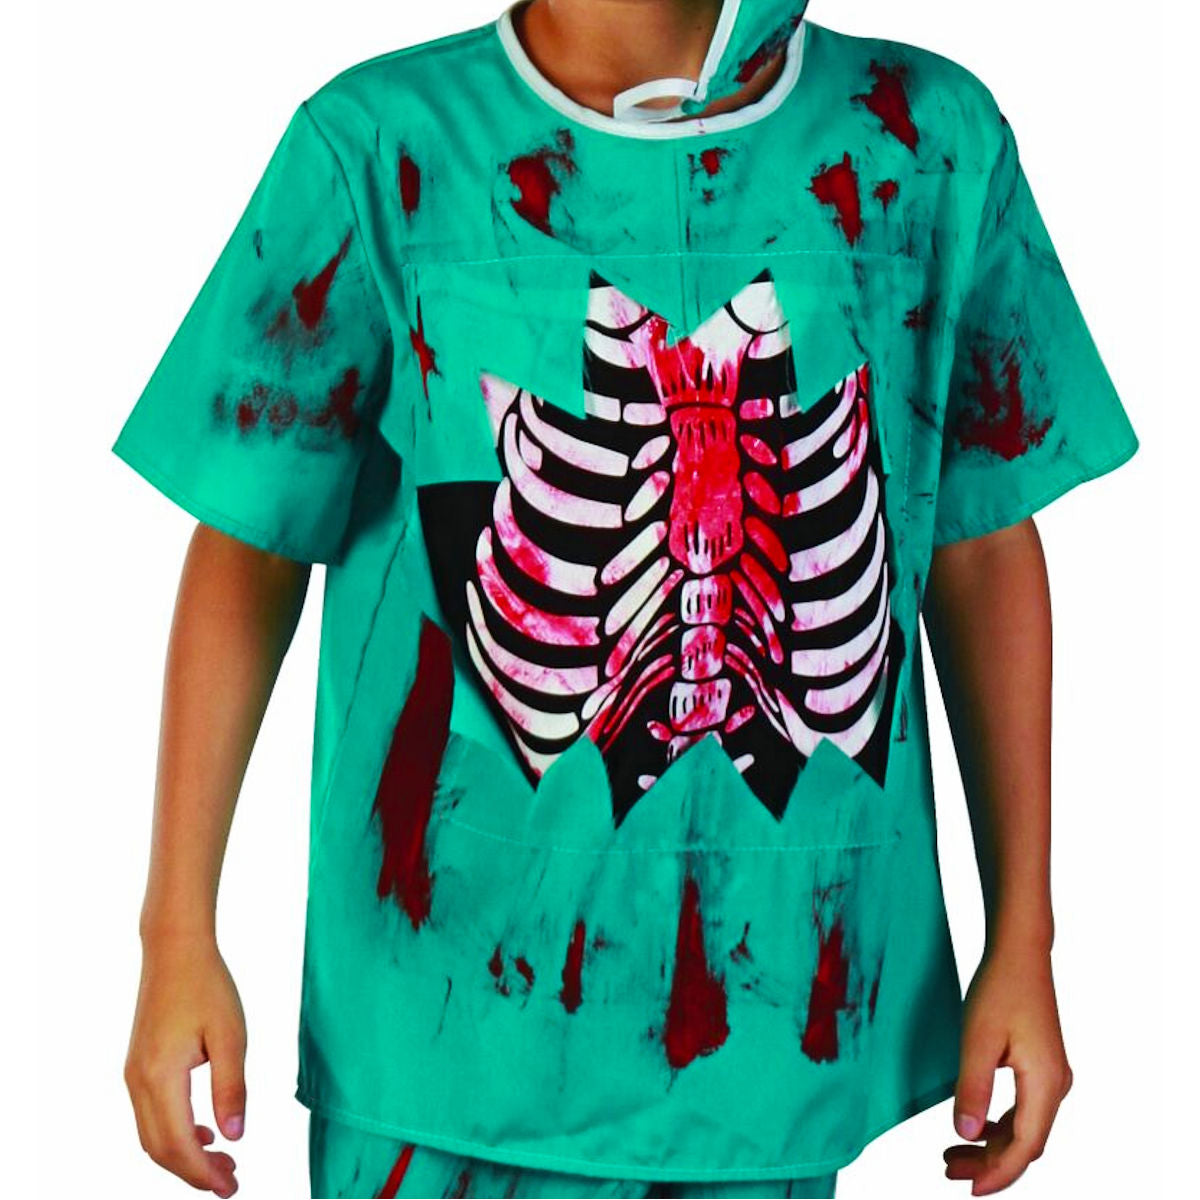 Junior Zombie Surgeon Doctor Boy's Halloween Party Costume